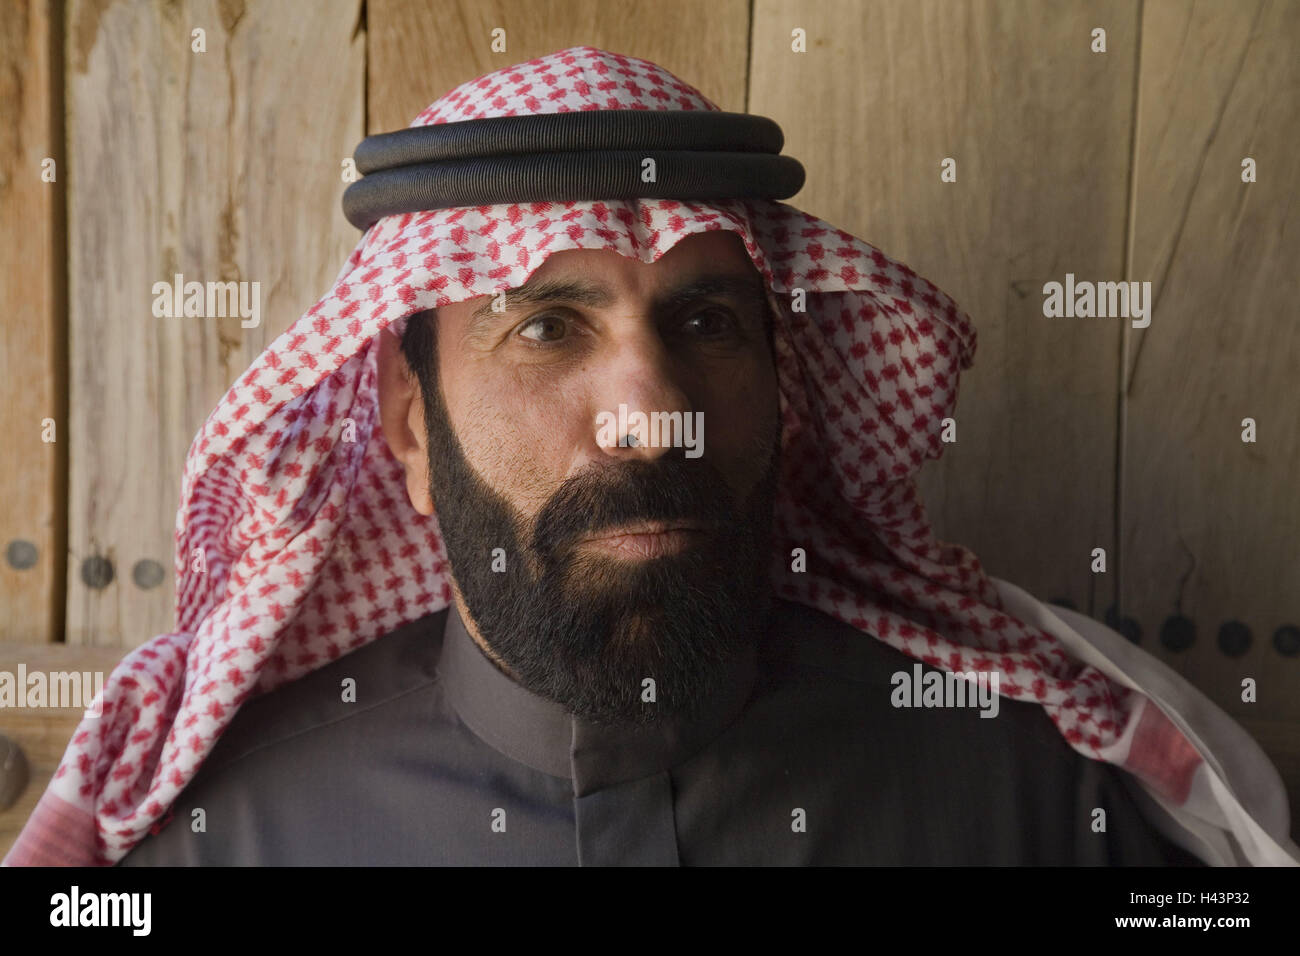 Saudi Arabia, tablespoon Naif, man, headgear, portrait, person, local, Arab, full beard, seriously, headscarf, Stock Photo